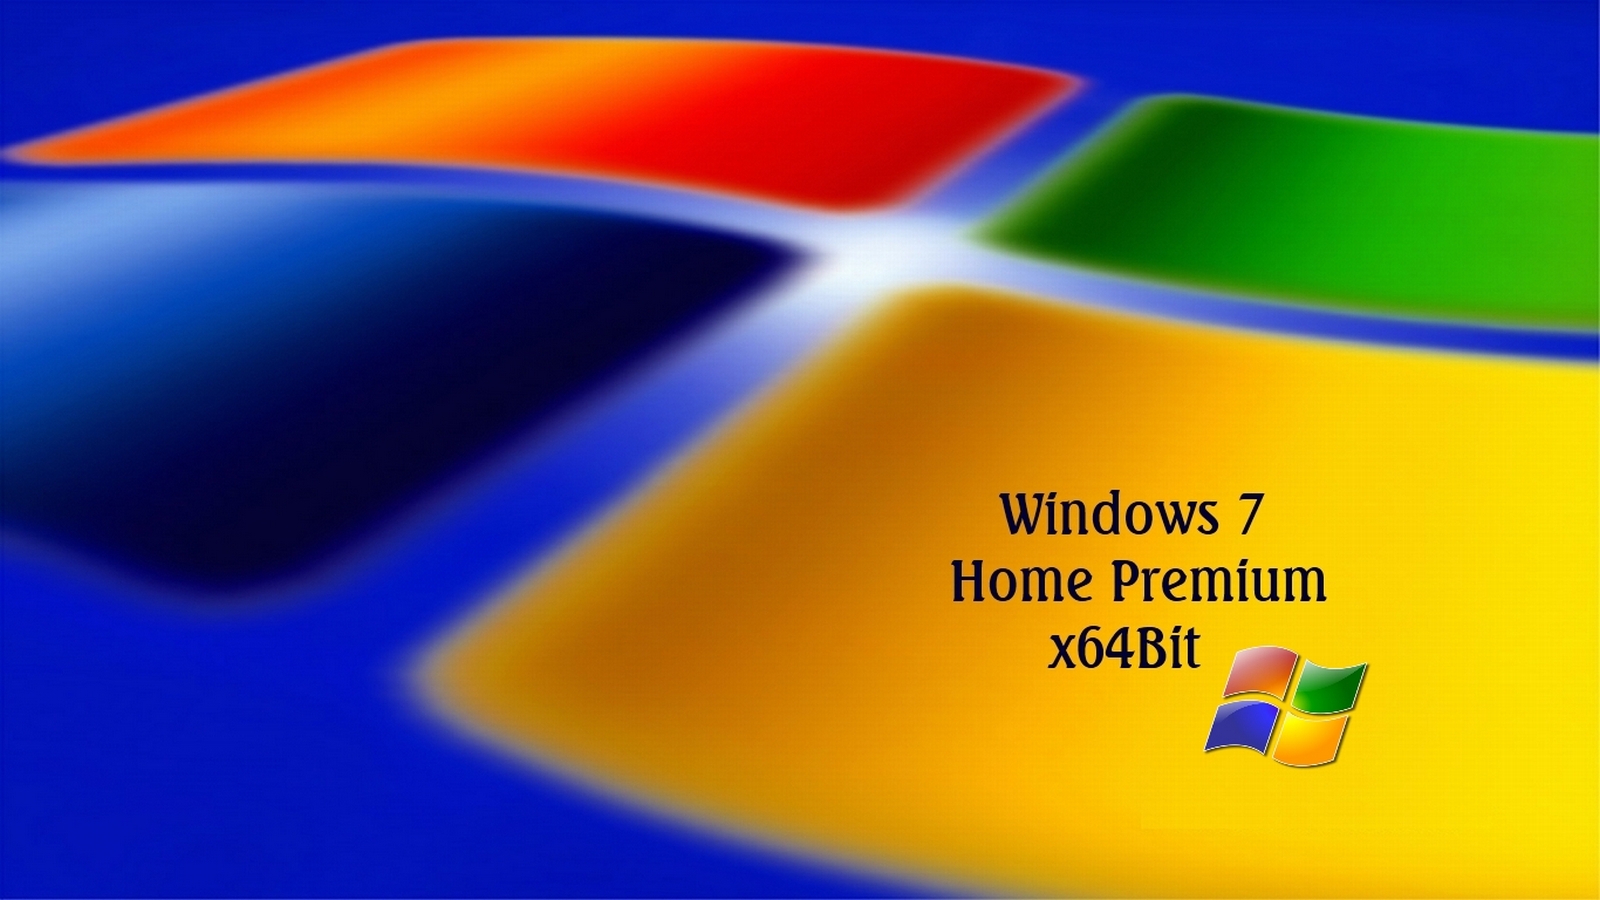 Hd wallpaper for windows 7 64 bit – Sfondo moderno